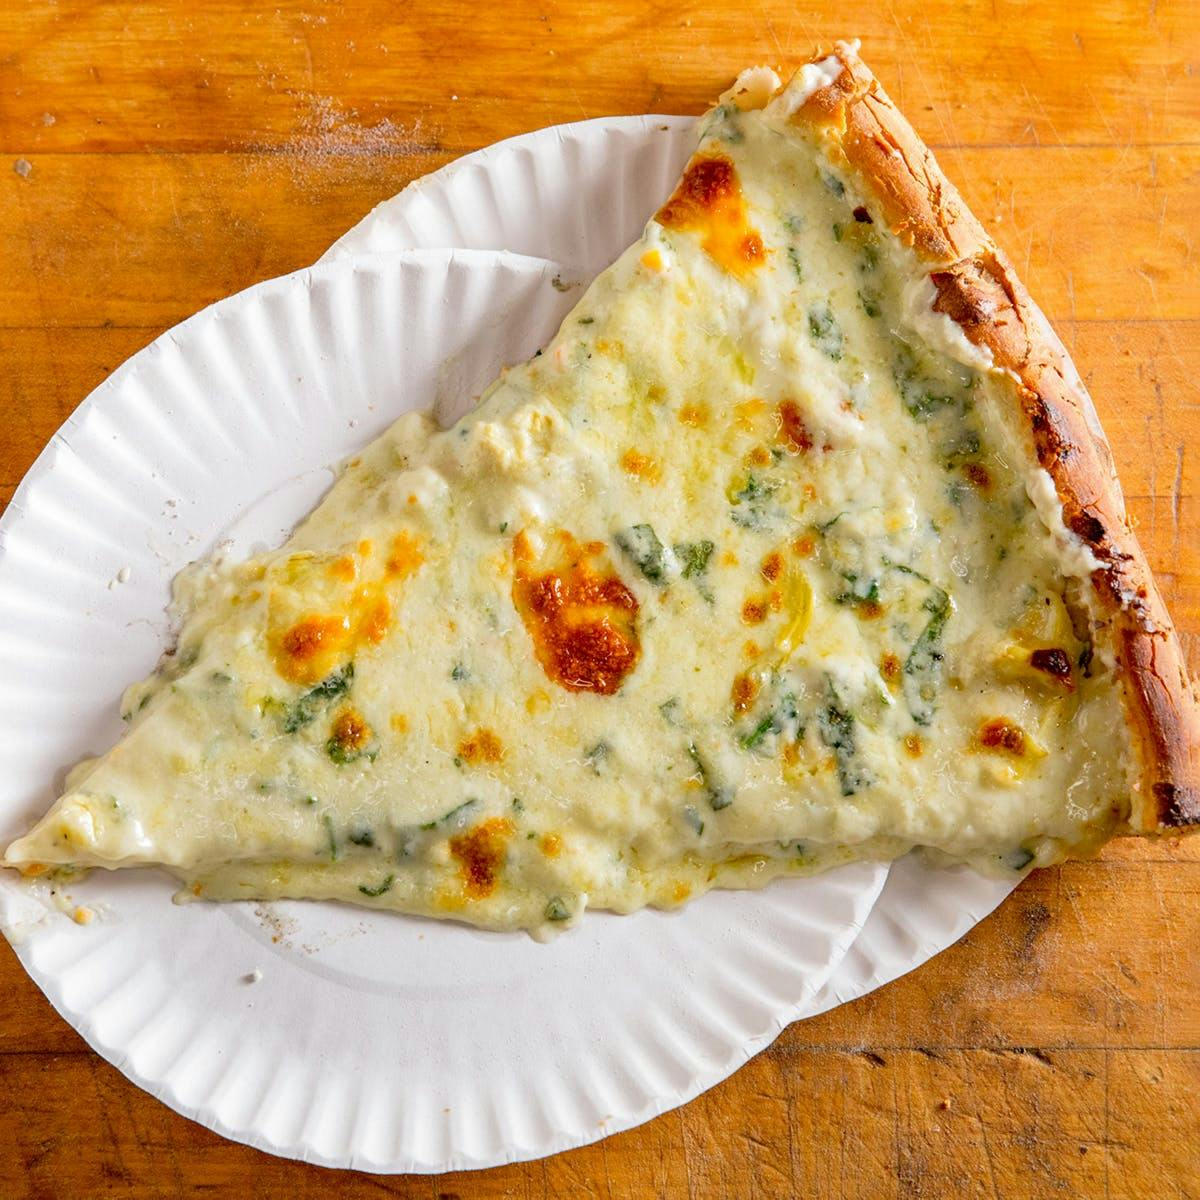 Justin Bieber Visits New York Restaurant Looking for Gluten-Free Pizza